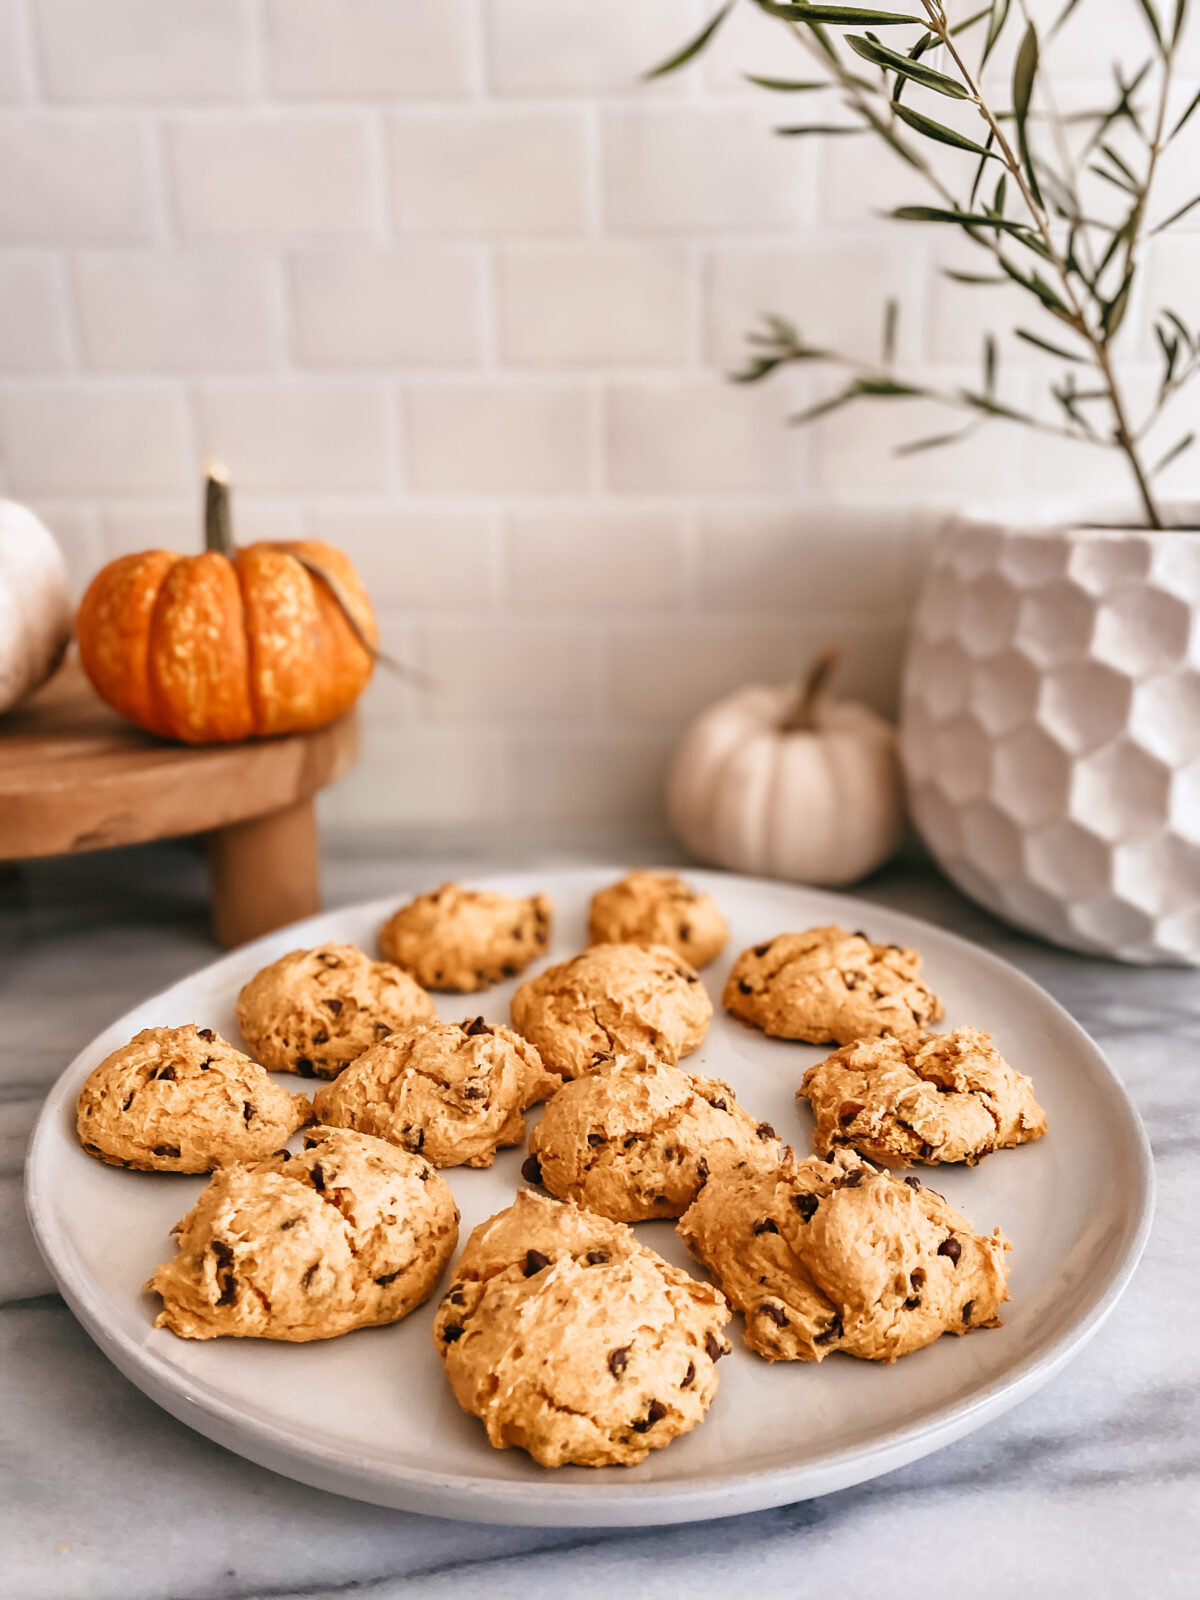 platter of 3 ingredient pumpkin chocolate chip cookies with pumpkins in background
